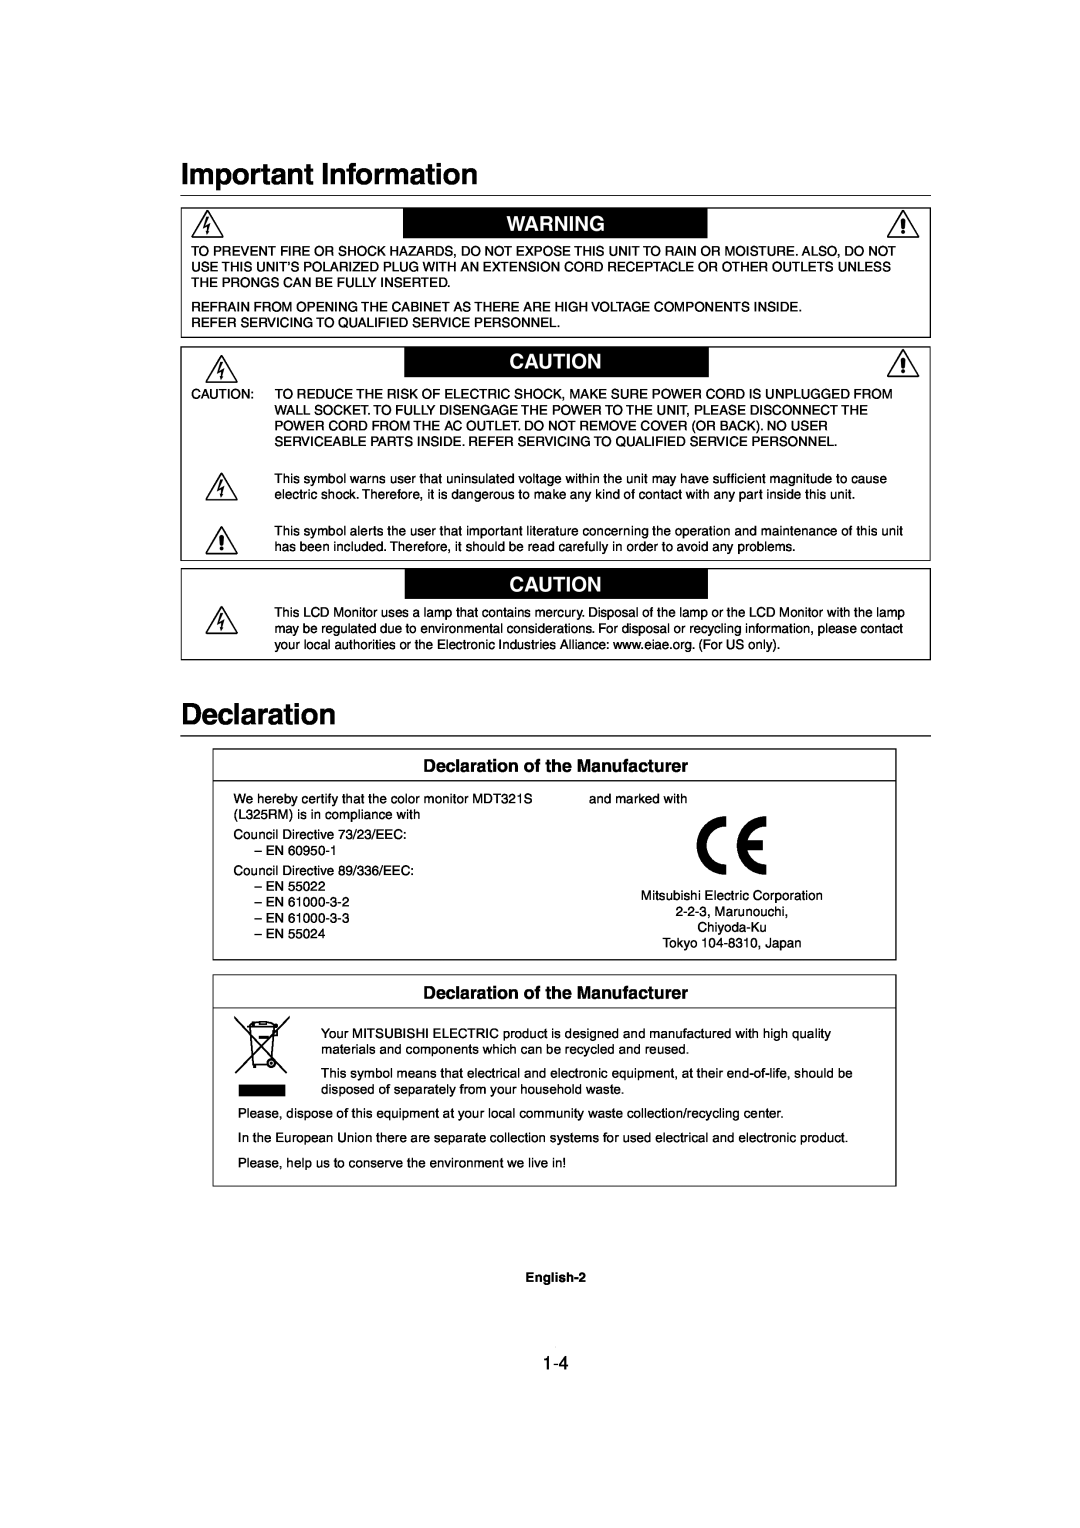 Mitsubishi Electronics MDT321S user manual Declaration of the Manufacturer, Important Information, English-2 